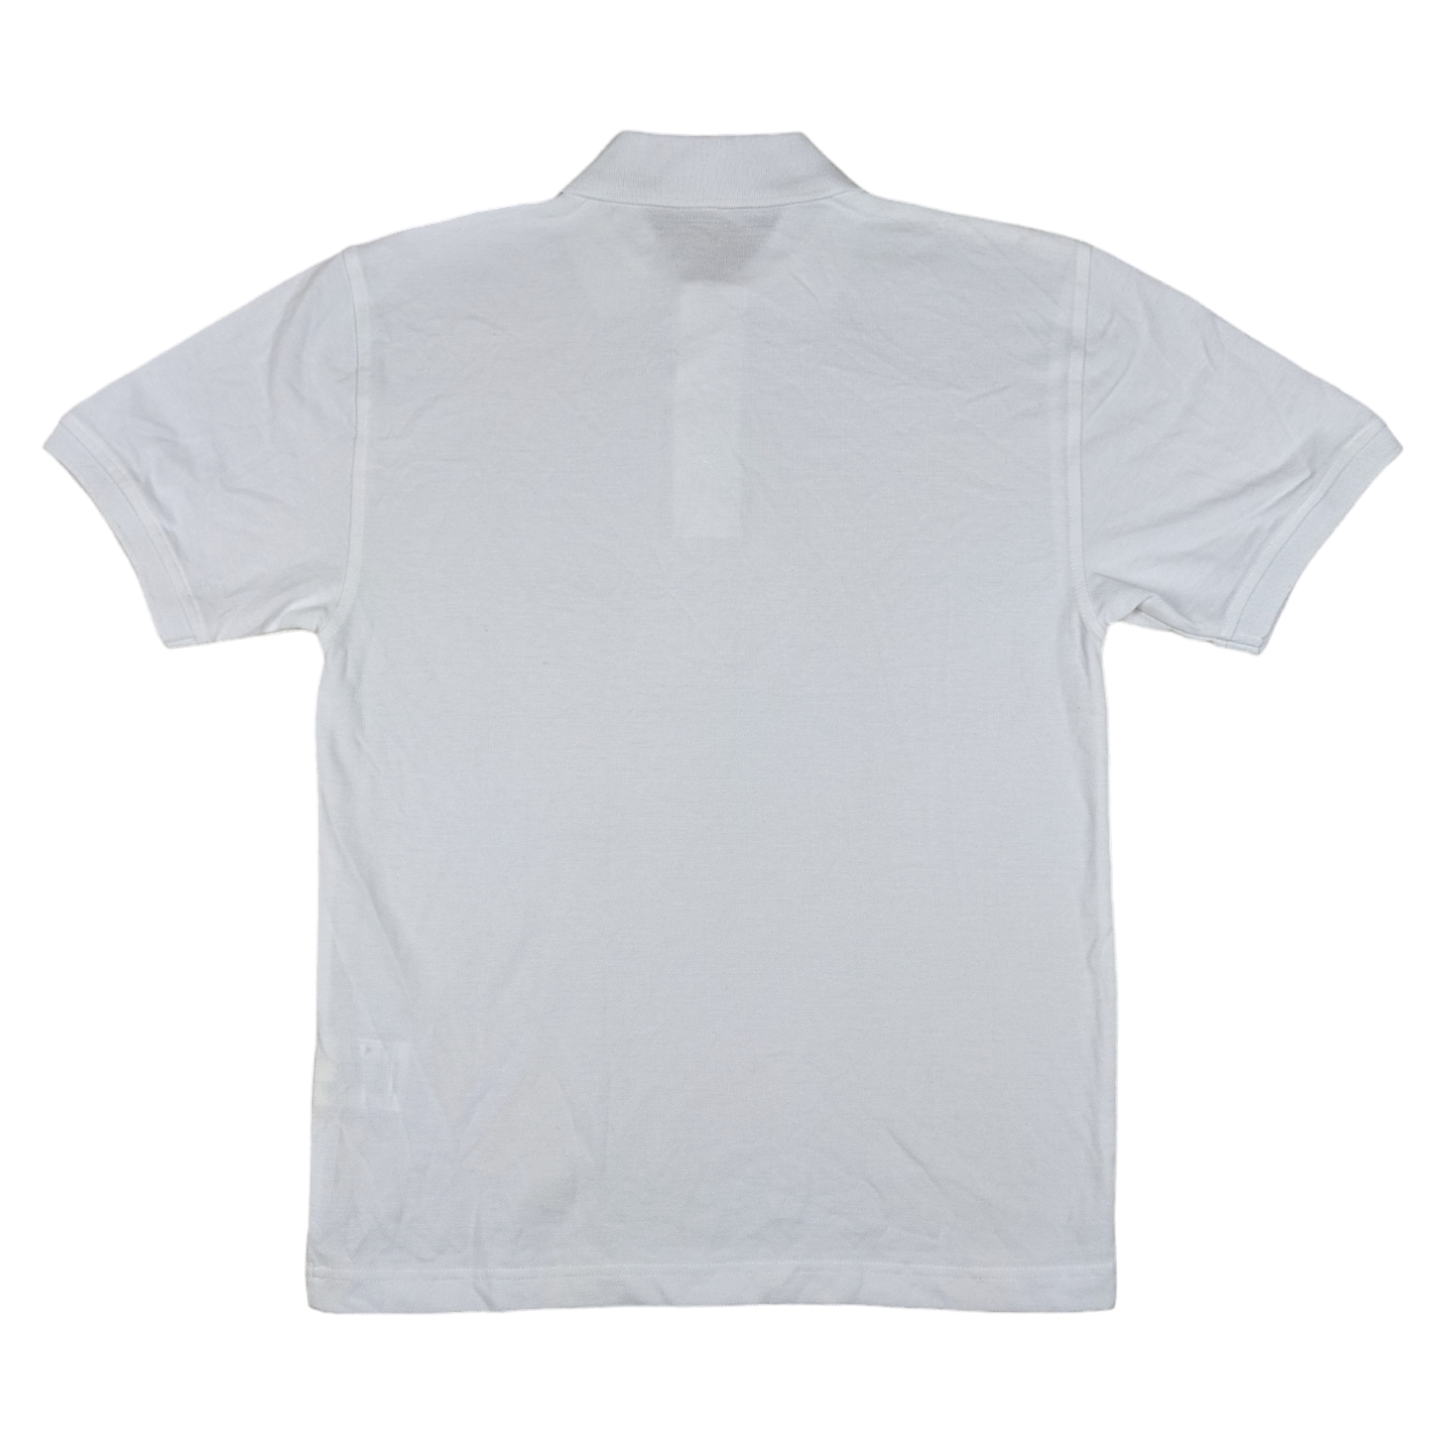 British Army White Polo Style Shirt